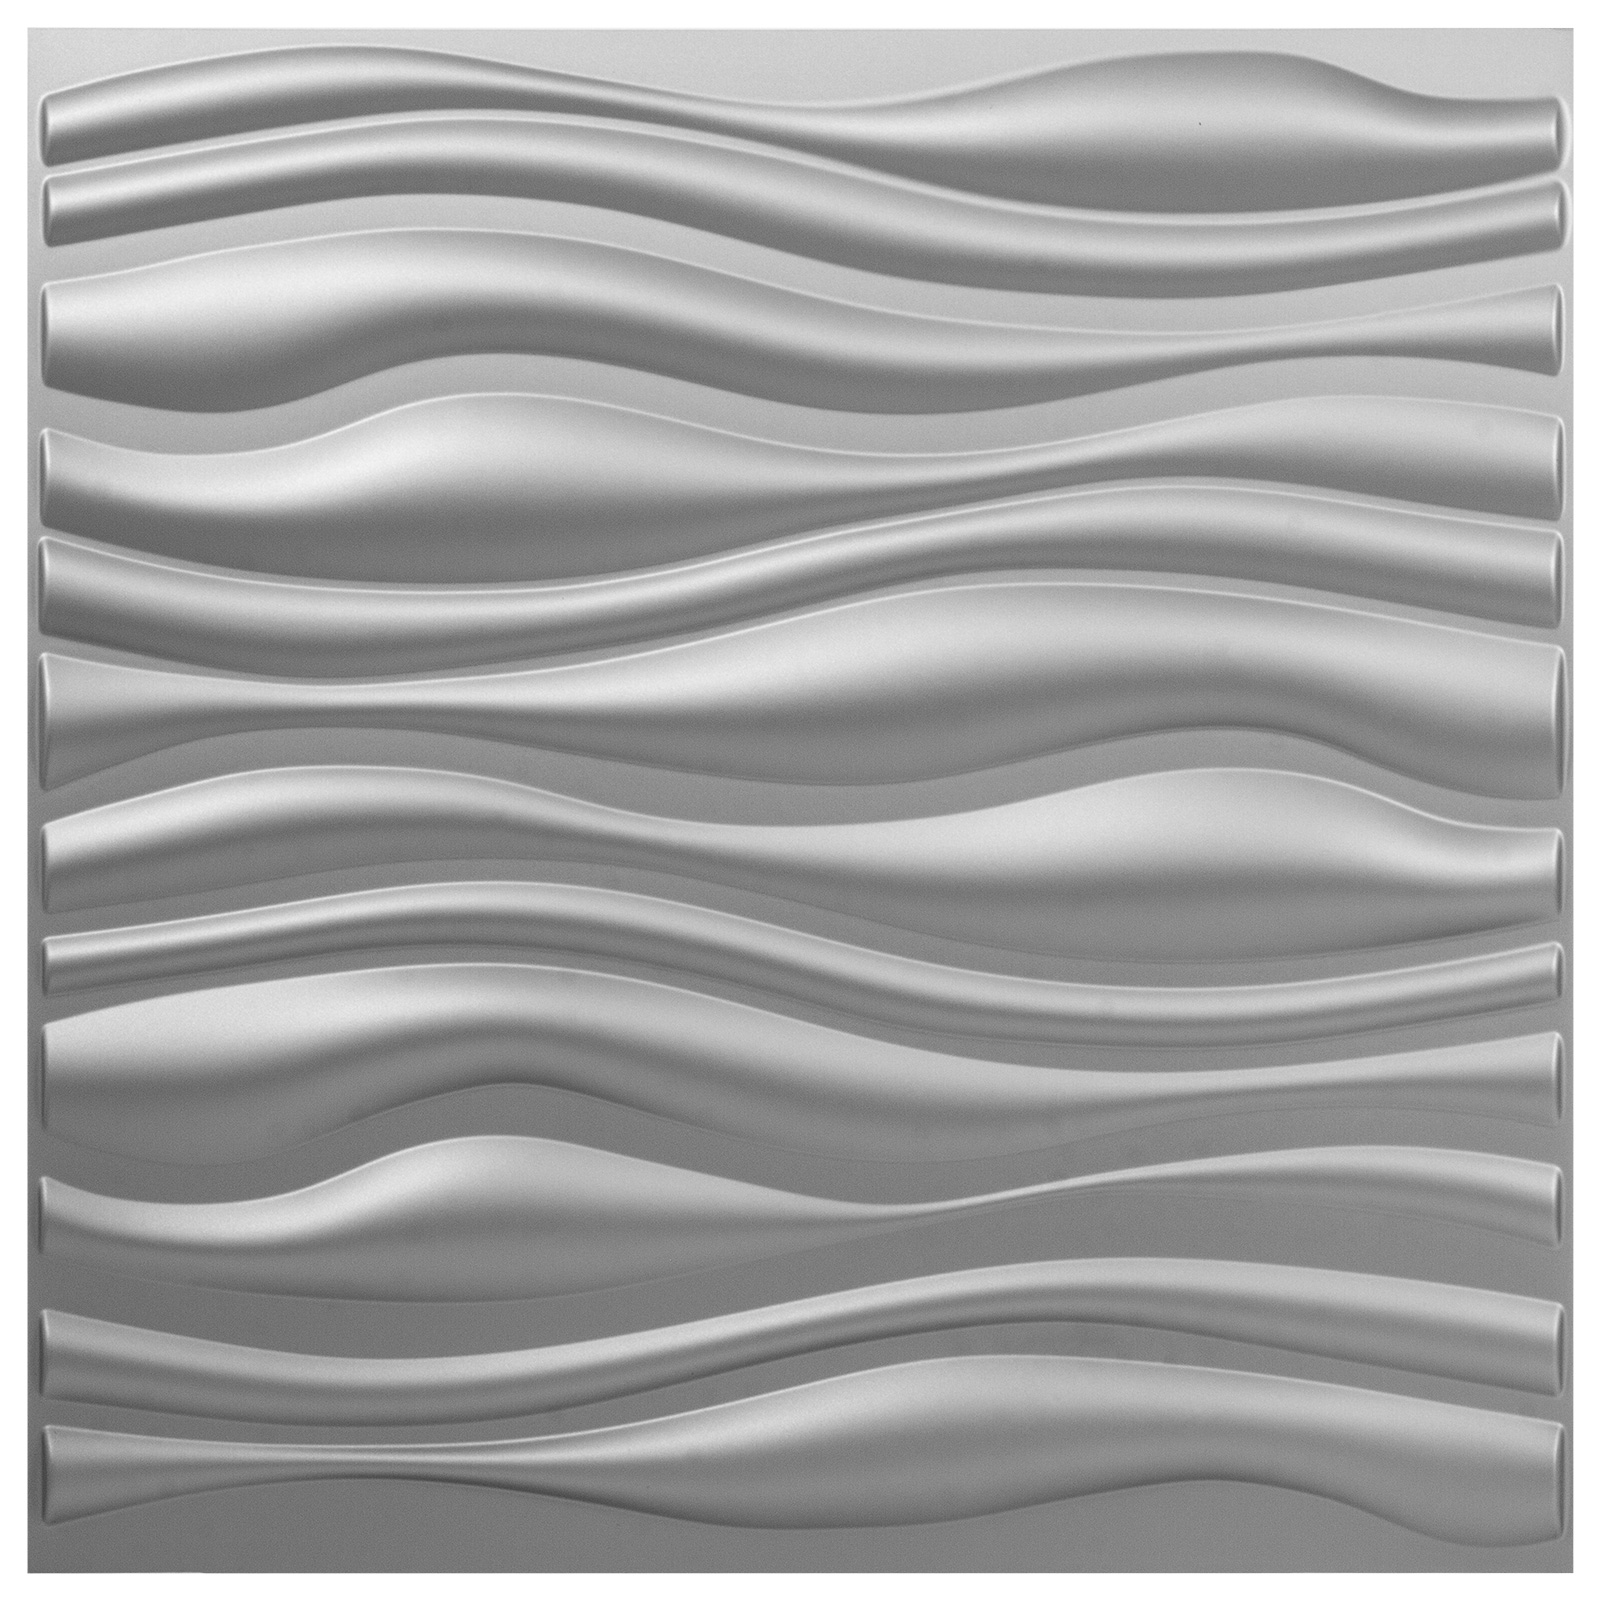 3D Wall Panels Waves Design PVC Textured Bricks 13 Tiles 19.7"x19.7" Waterproof 